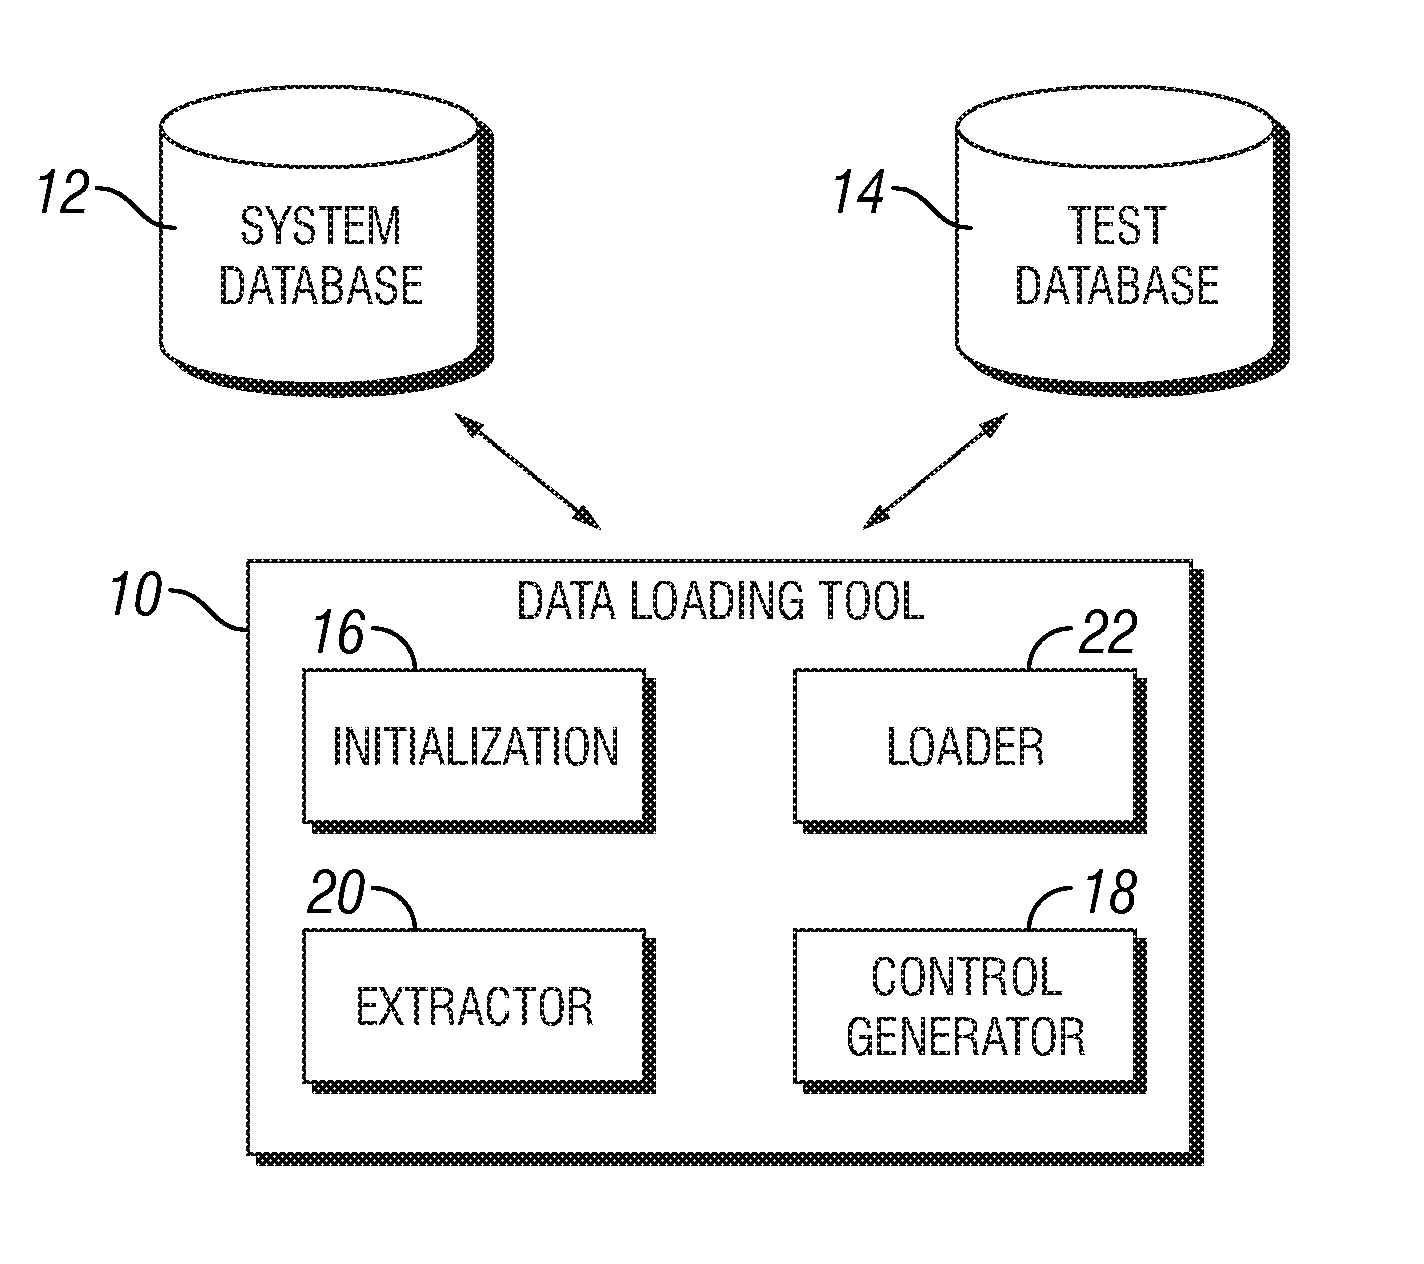 Data loading tool for loading a database